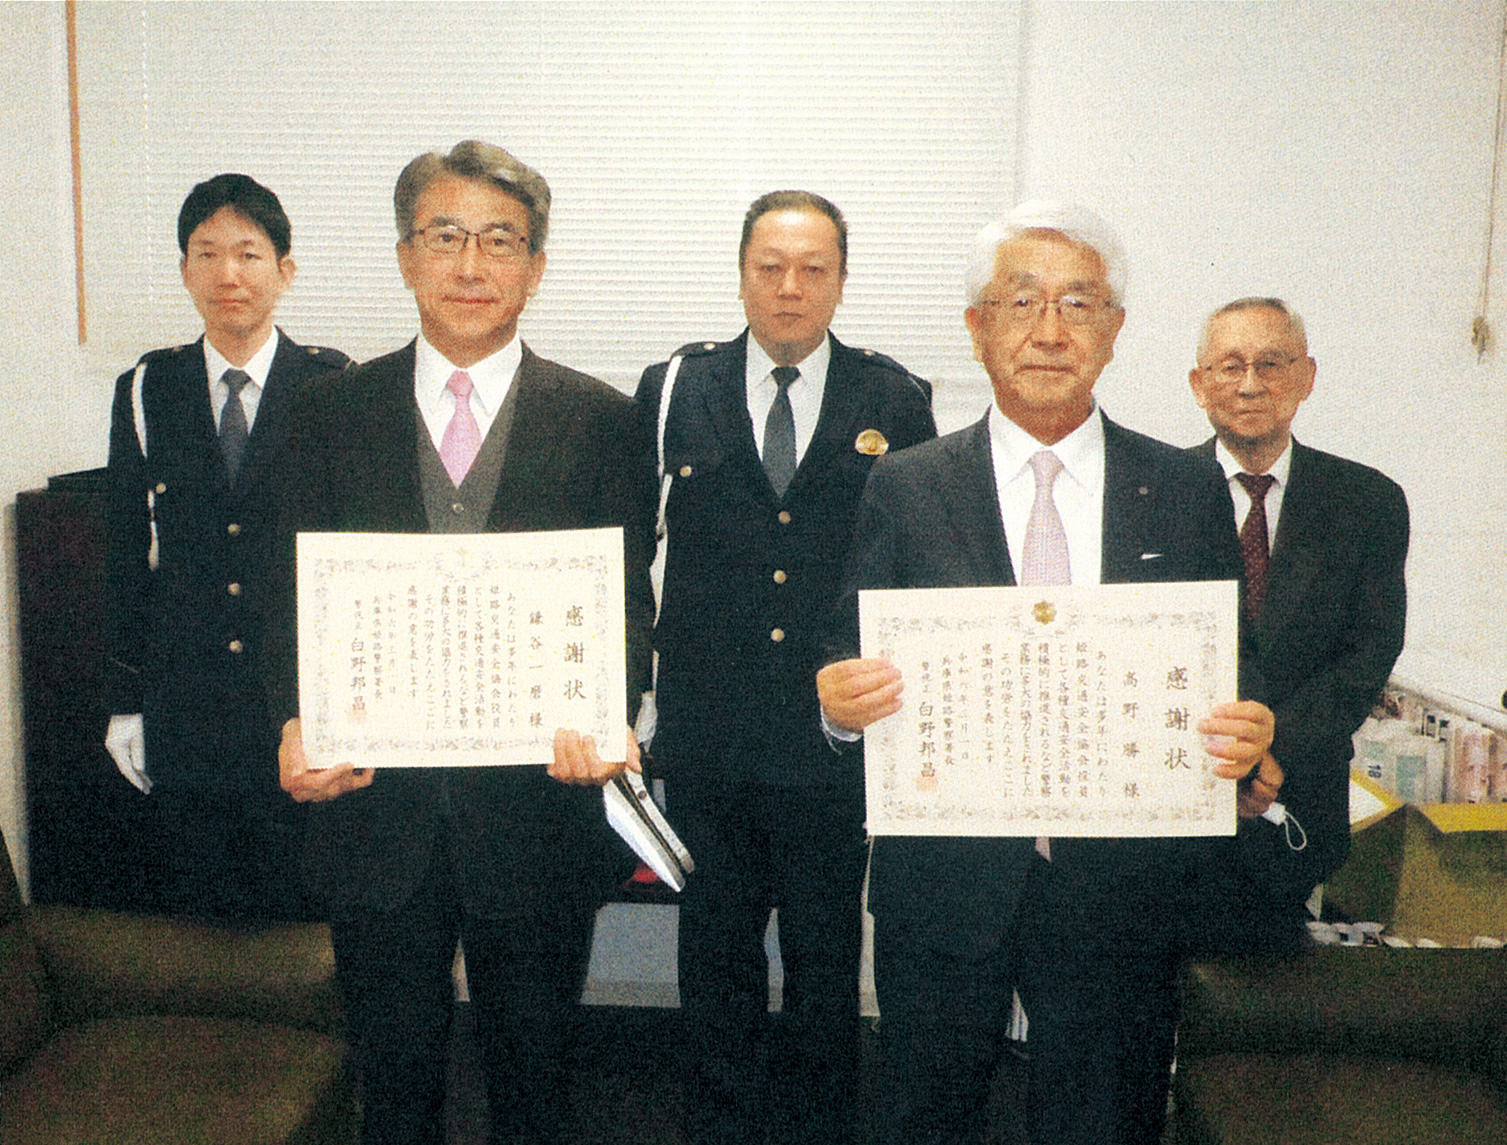 姫路交通安全協会役員への感謝状贈呈式